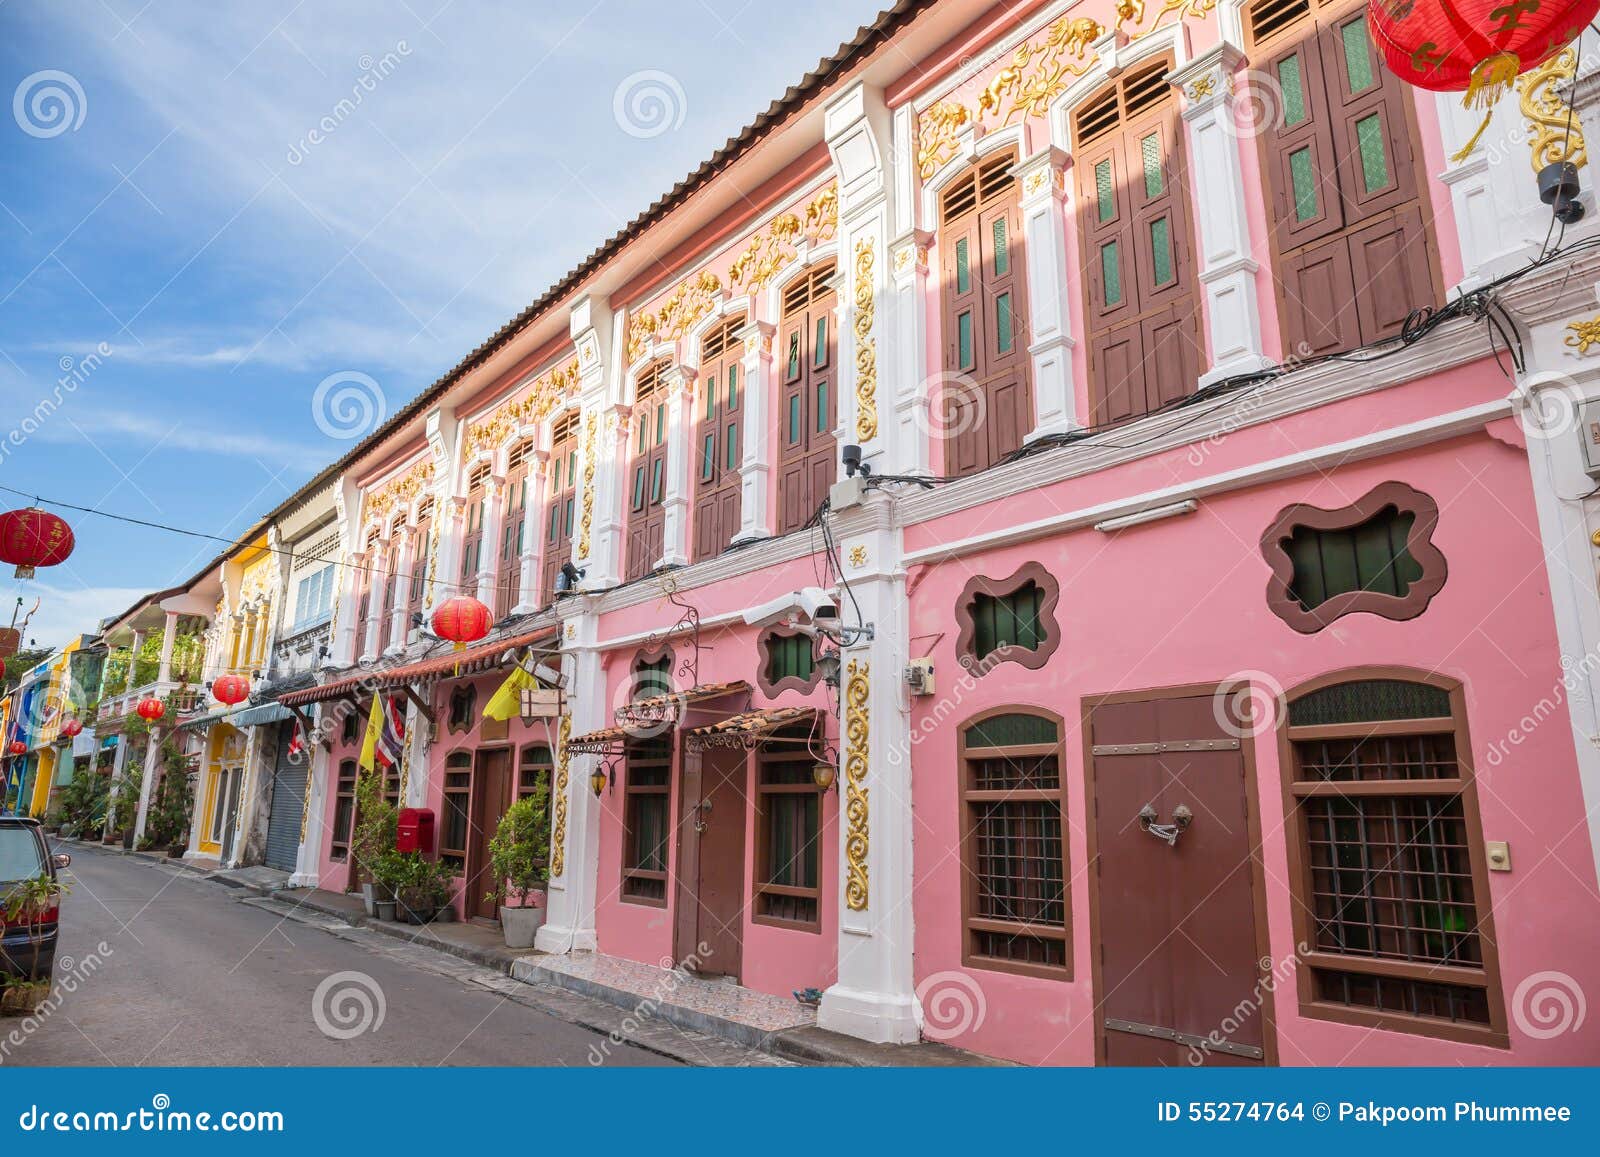 the old town phuket chino portuguese style at soi rommanee talang road., phuket town